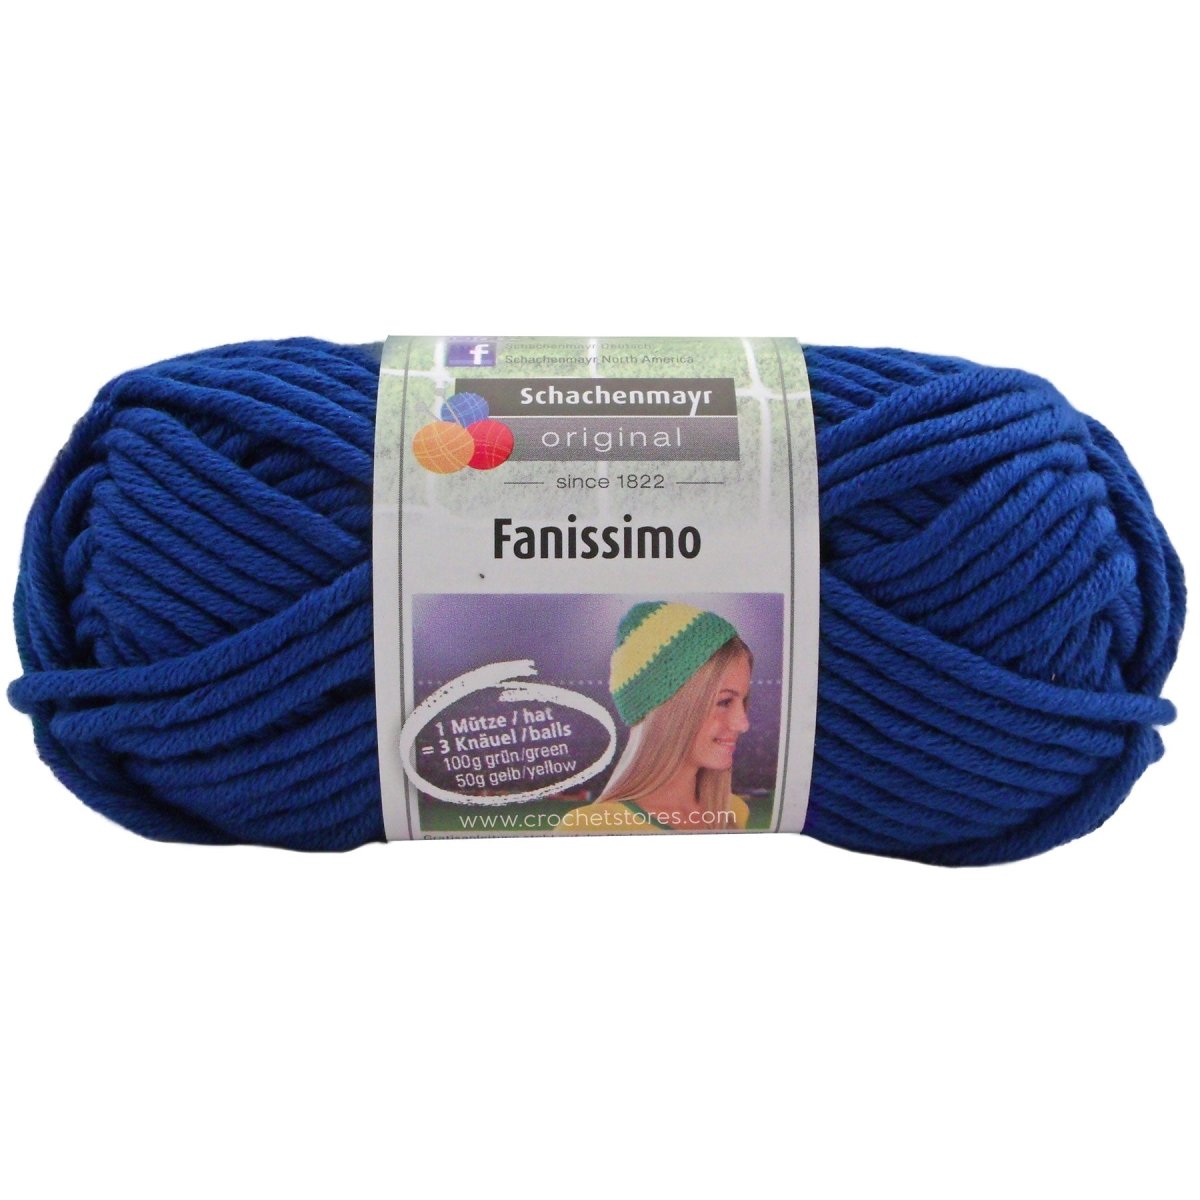 FANISSIMO - Crochetstores9807335-3534053859027823